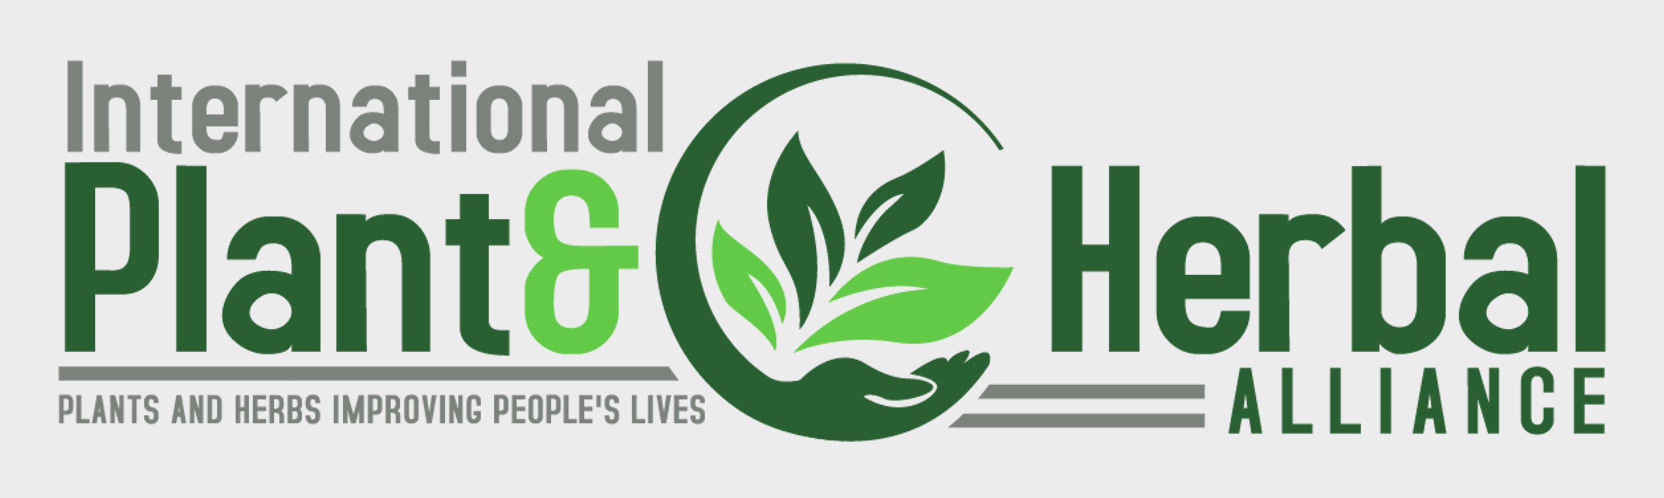 International Plant & Herbal Alliance